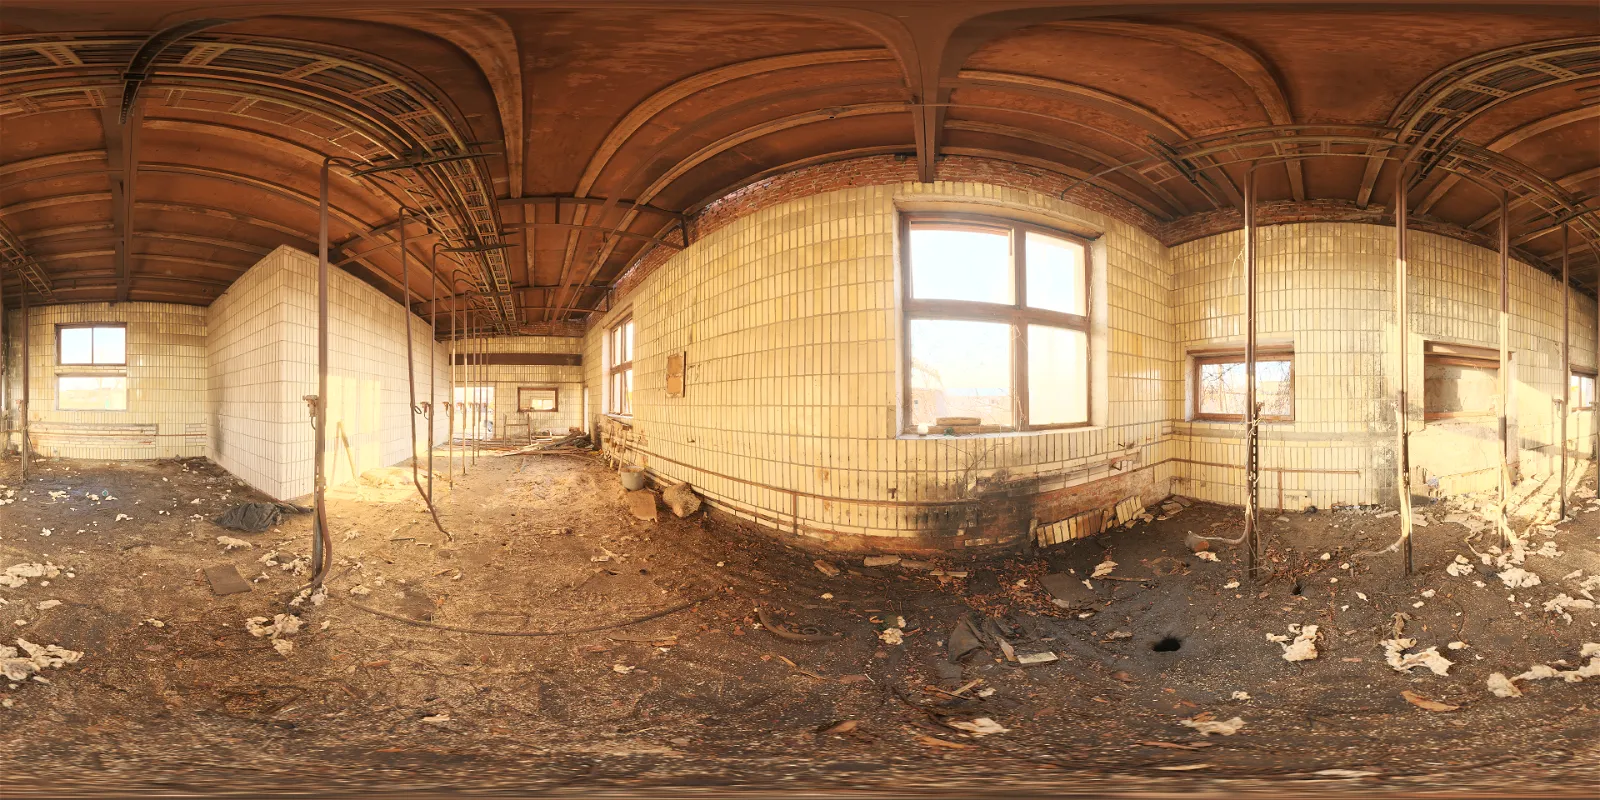 HDRI – Abandoned Tiled Room – urban